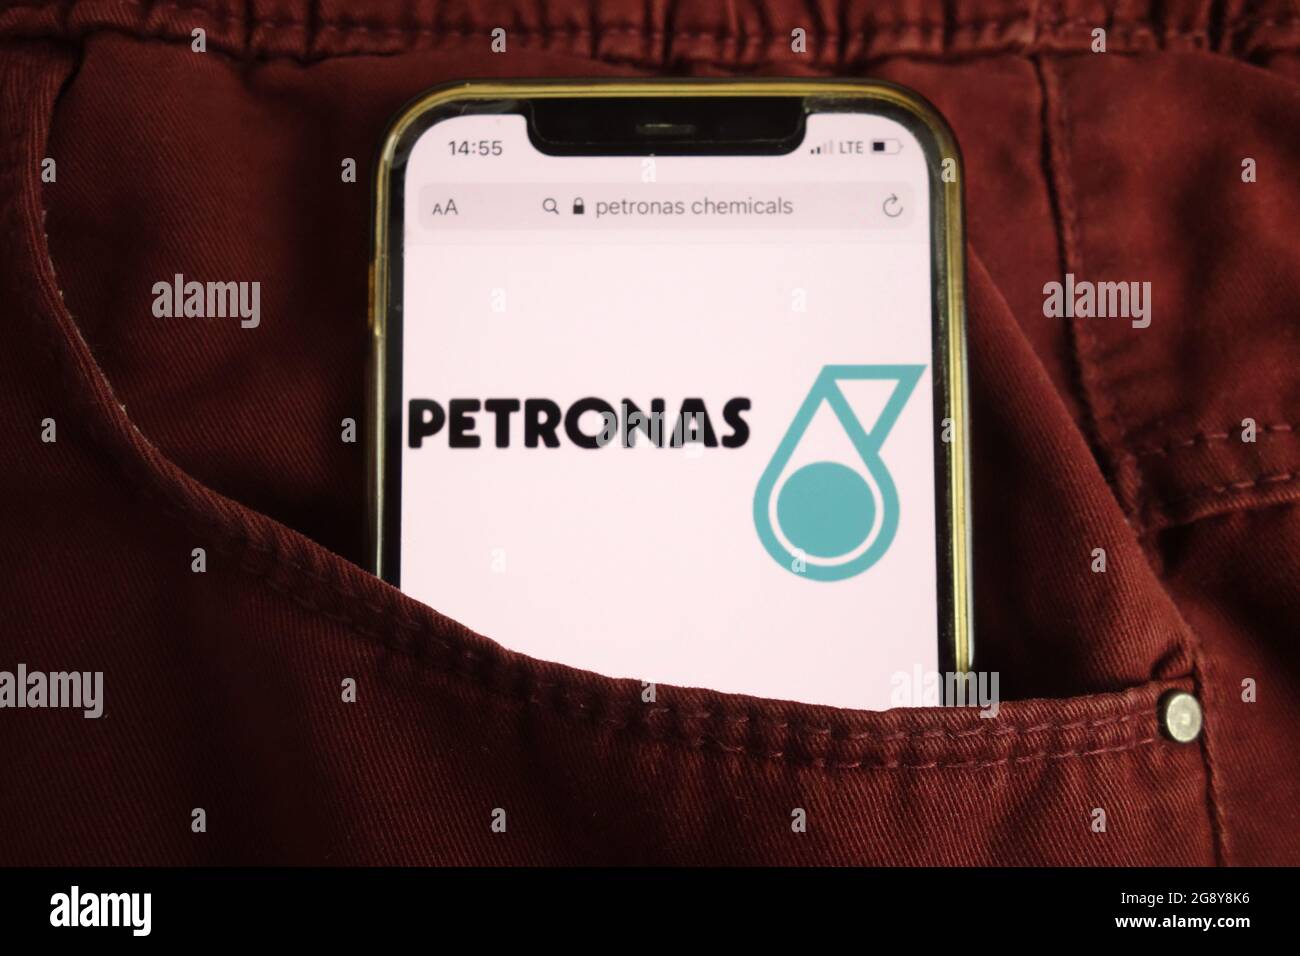 Share price chemicals petronas PETRONAS CHEMICALS